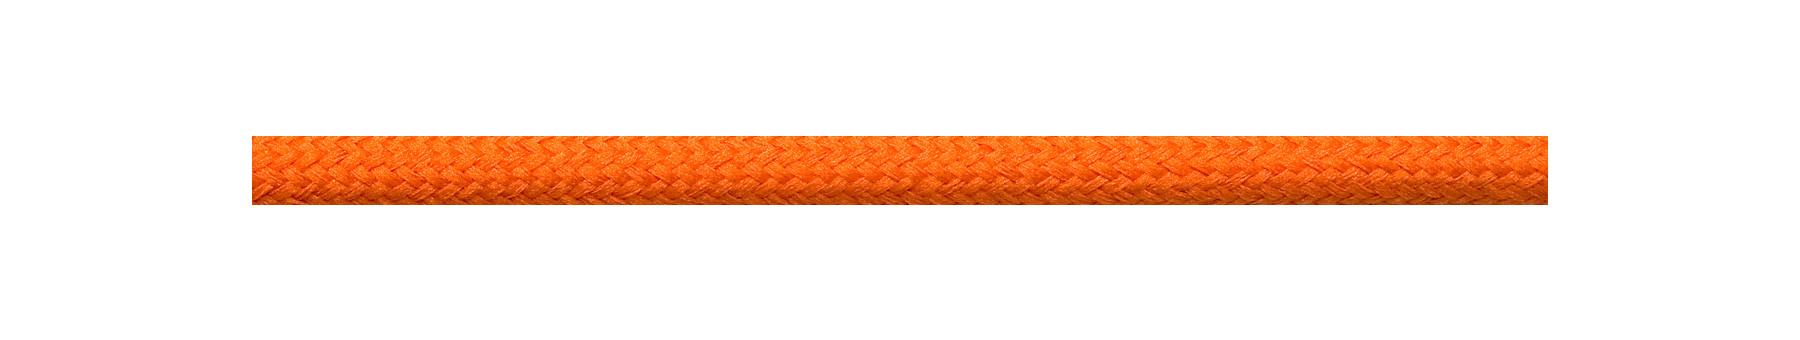 Textile Cable Orange